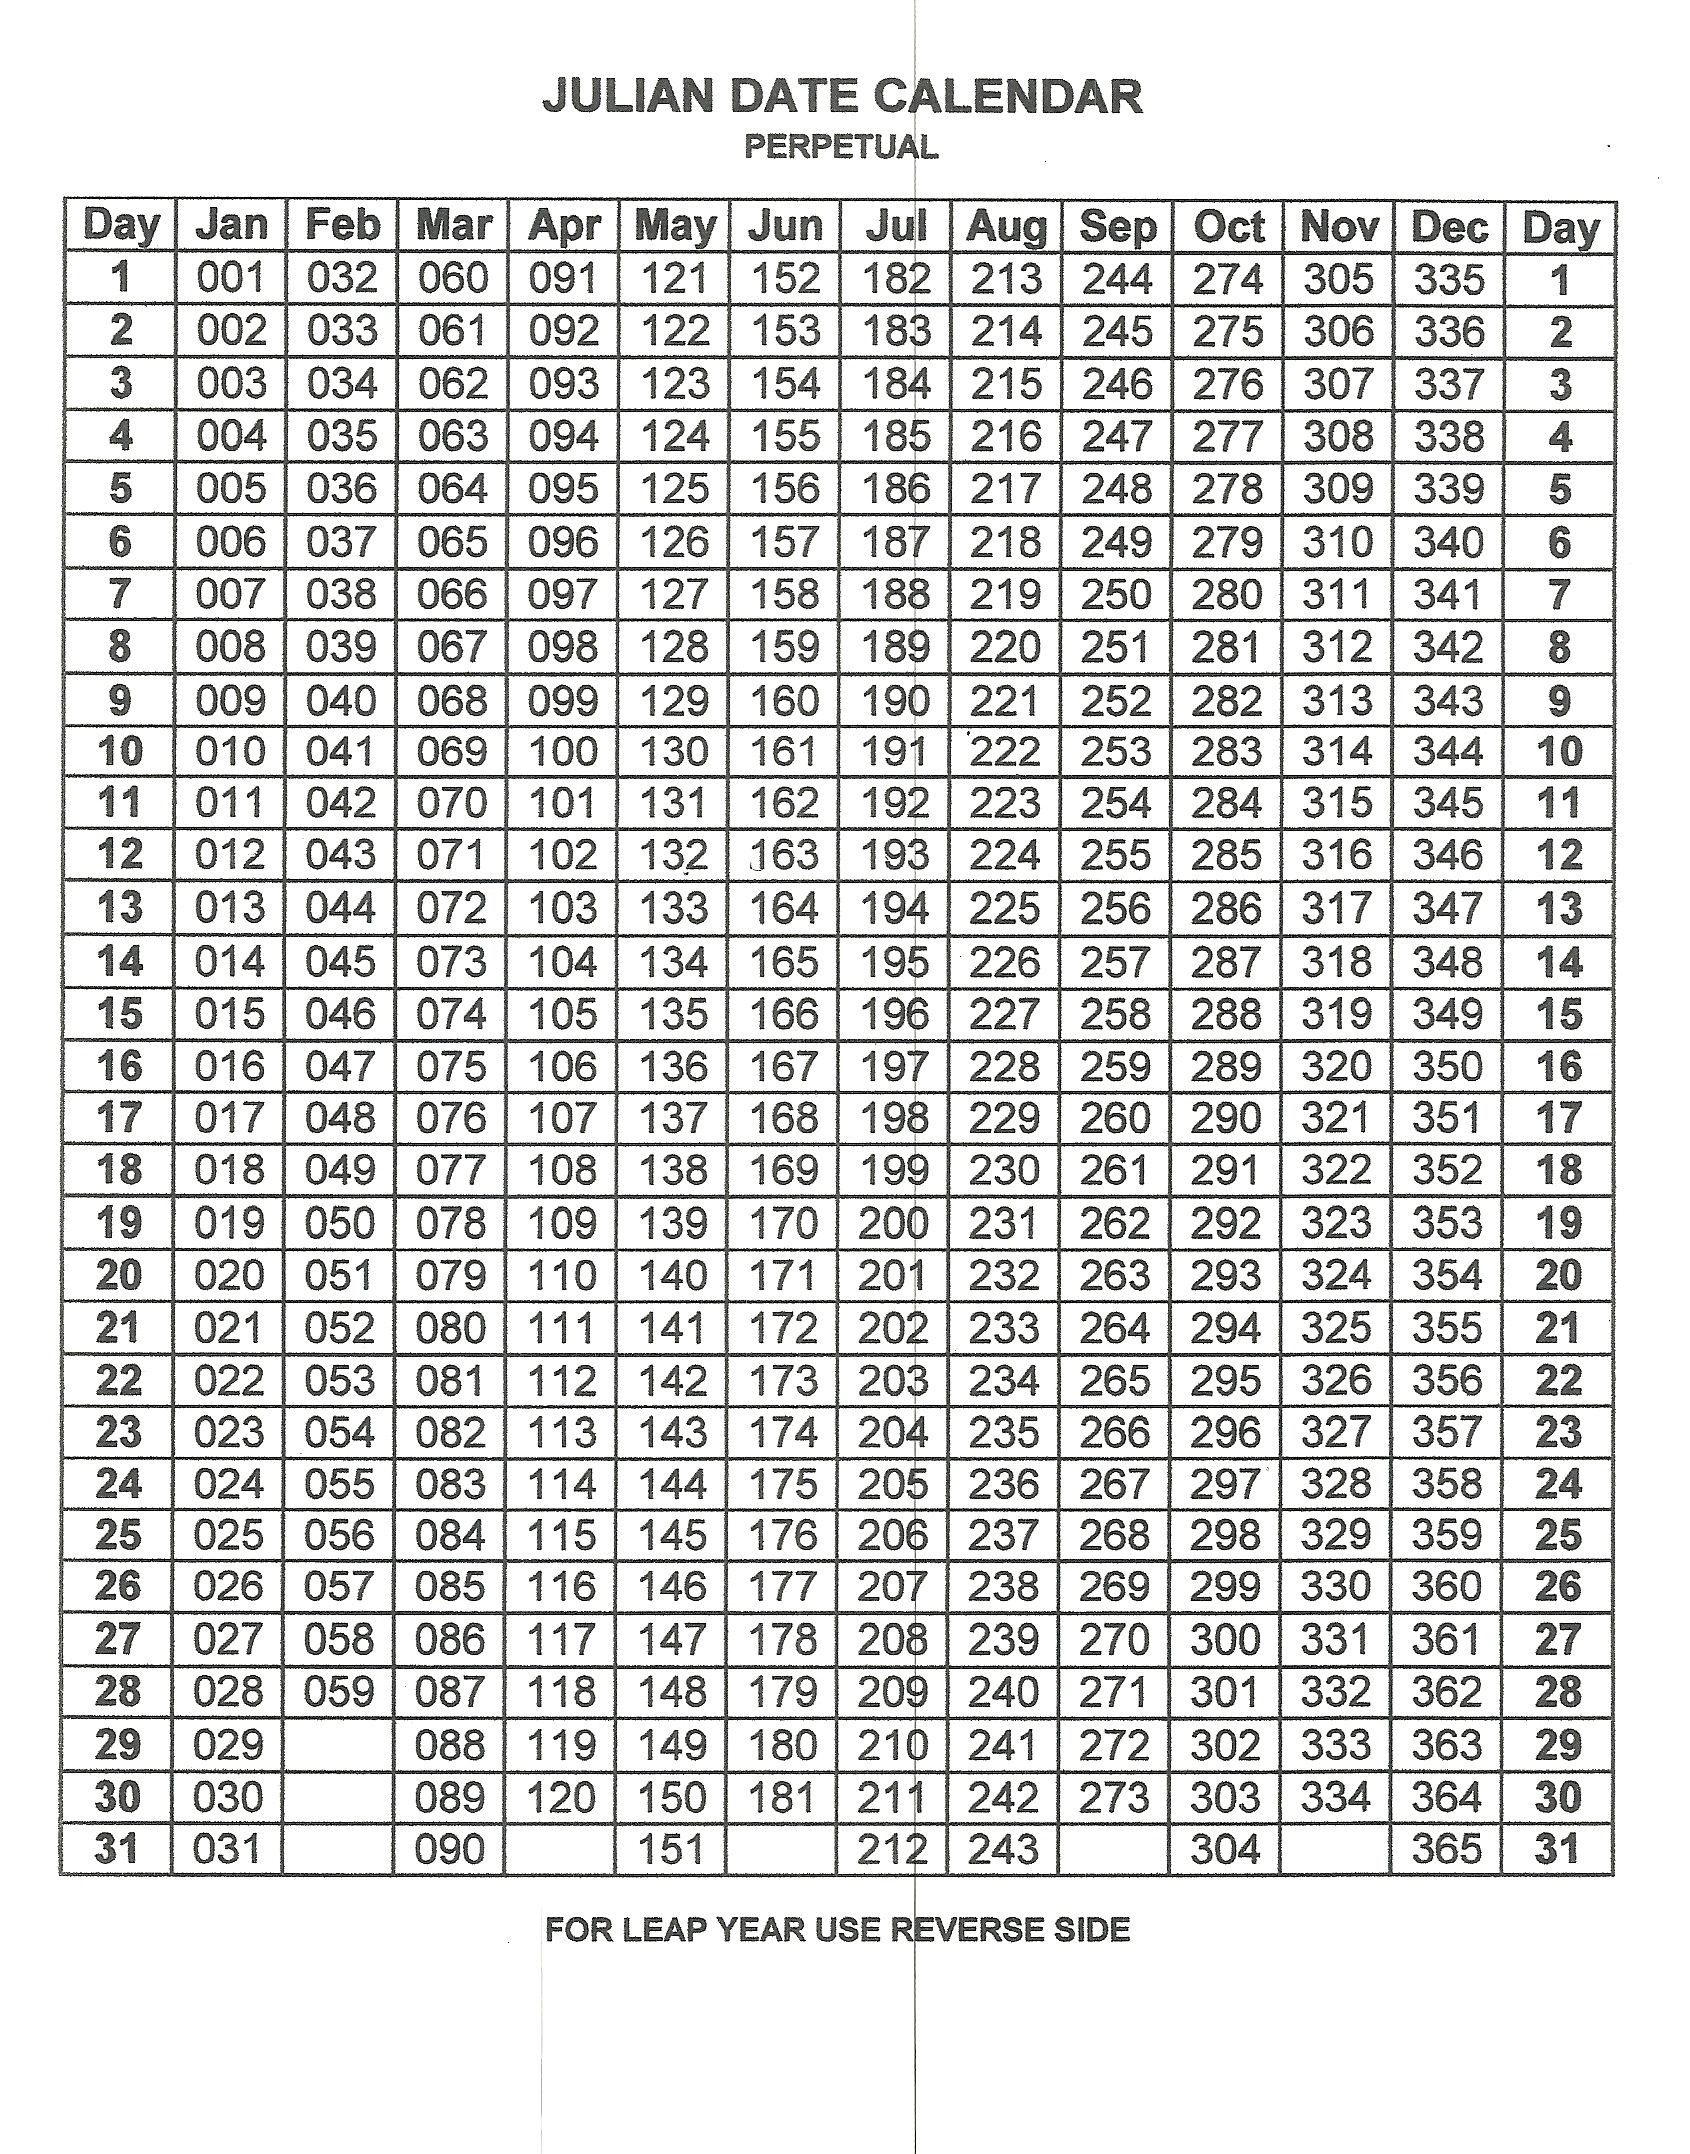 Perpetual Julian Date Calendar | Calendar Printables  Julian Date Calendar 2020